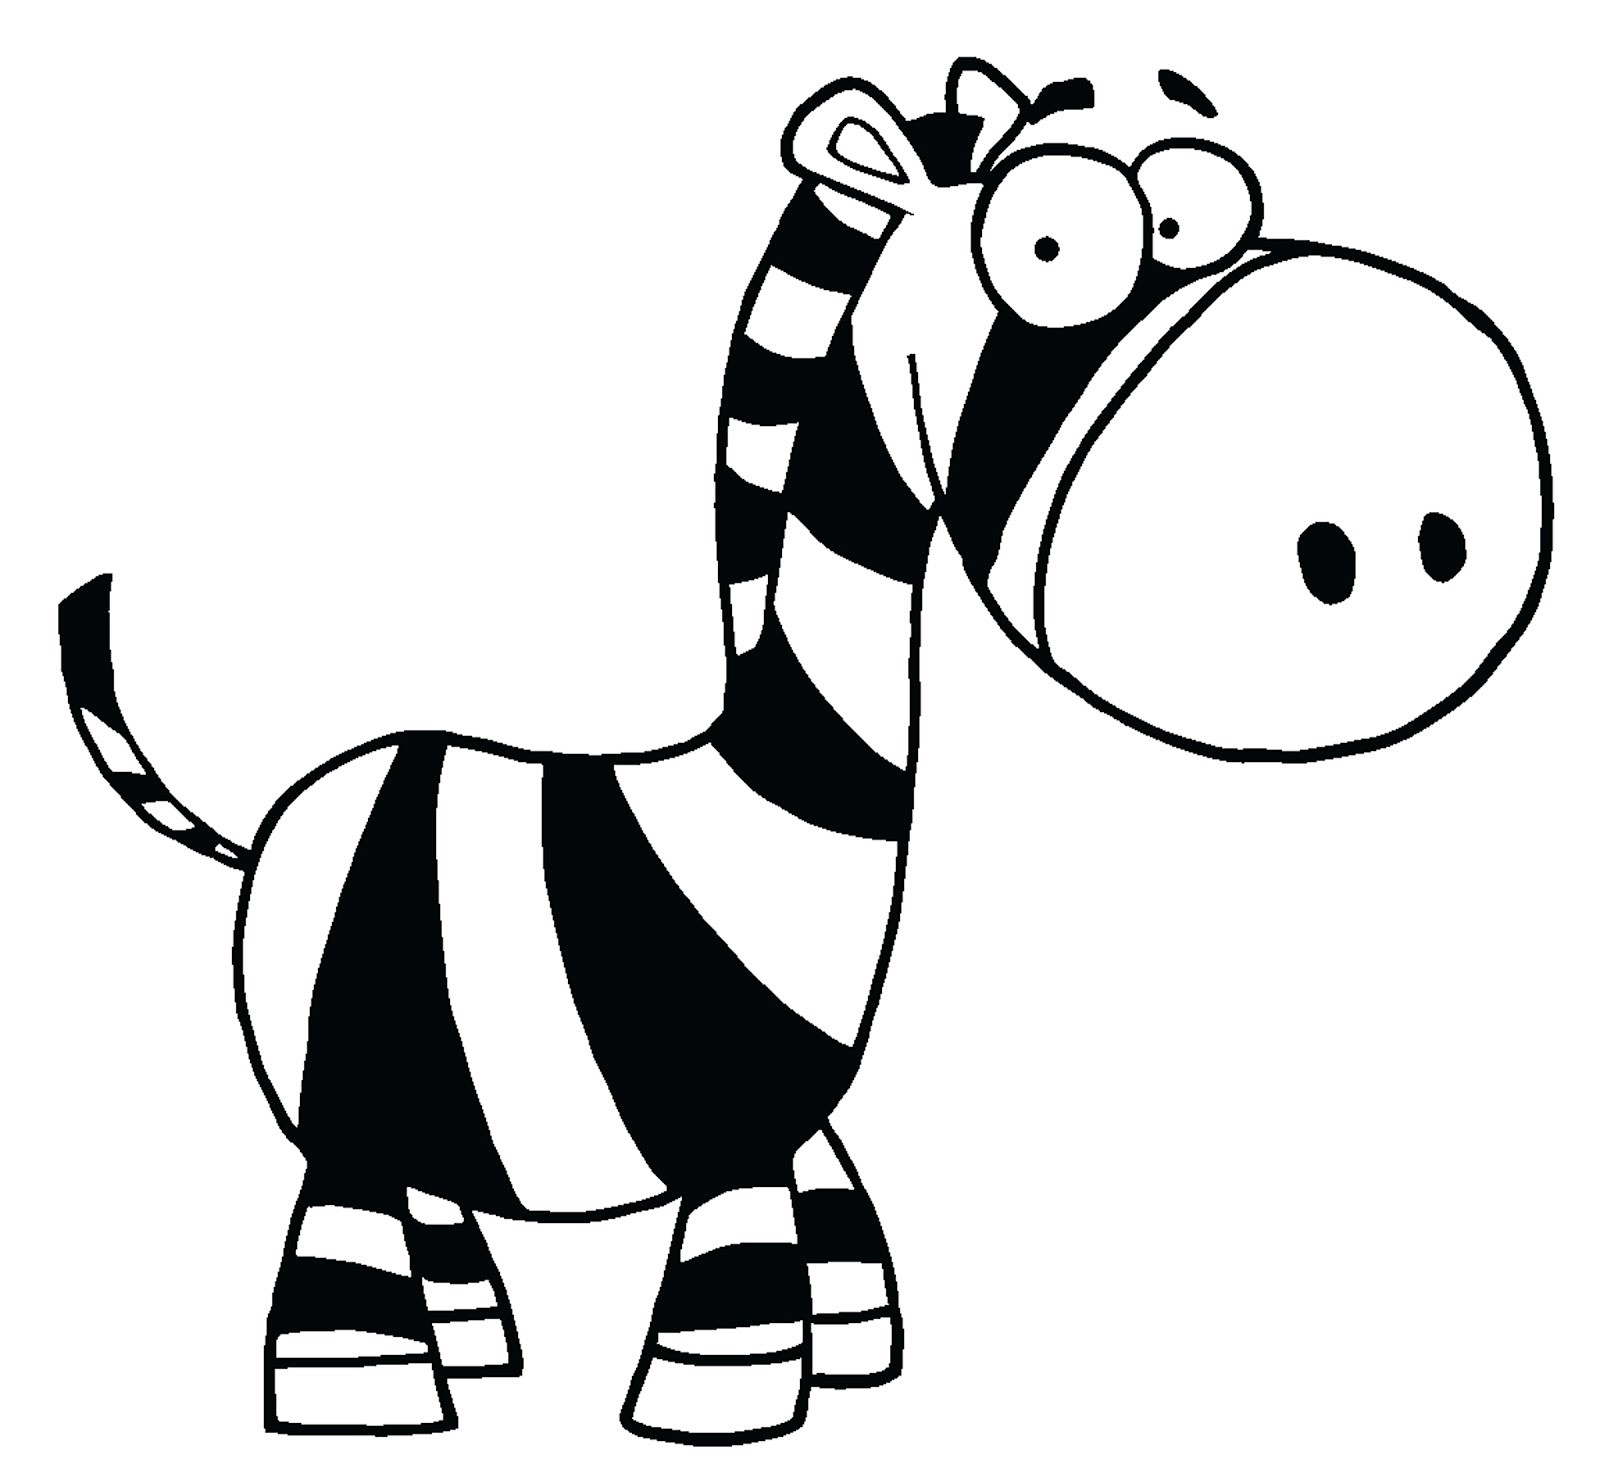 Baby zebra zebra cartoon pictures clip art image #12489 - ClipArt Best -  ClipArt Best